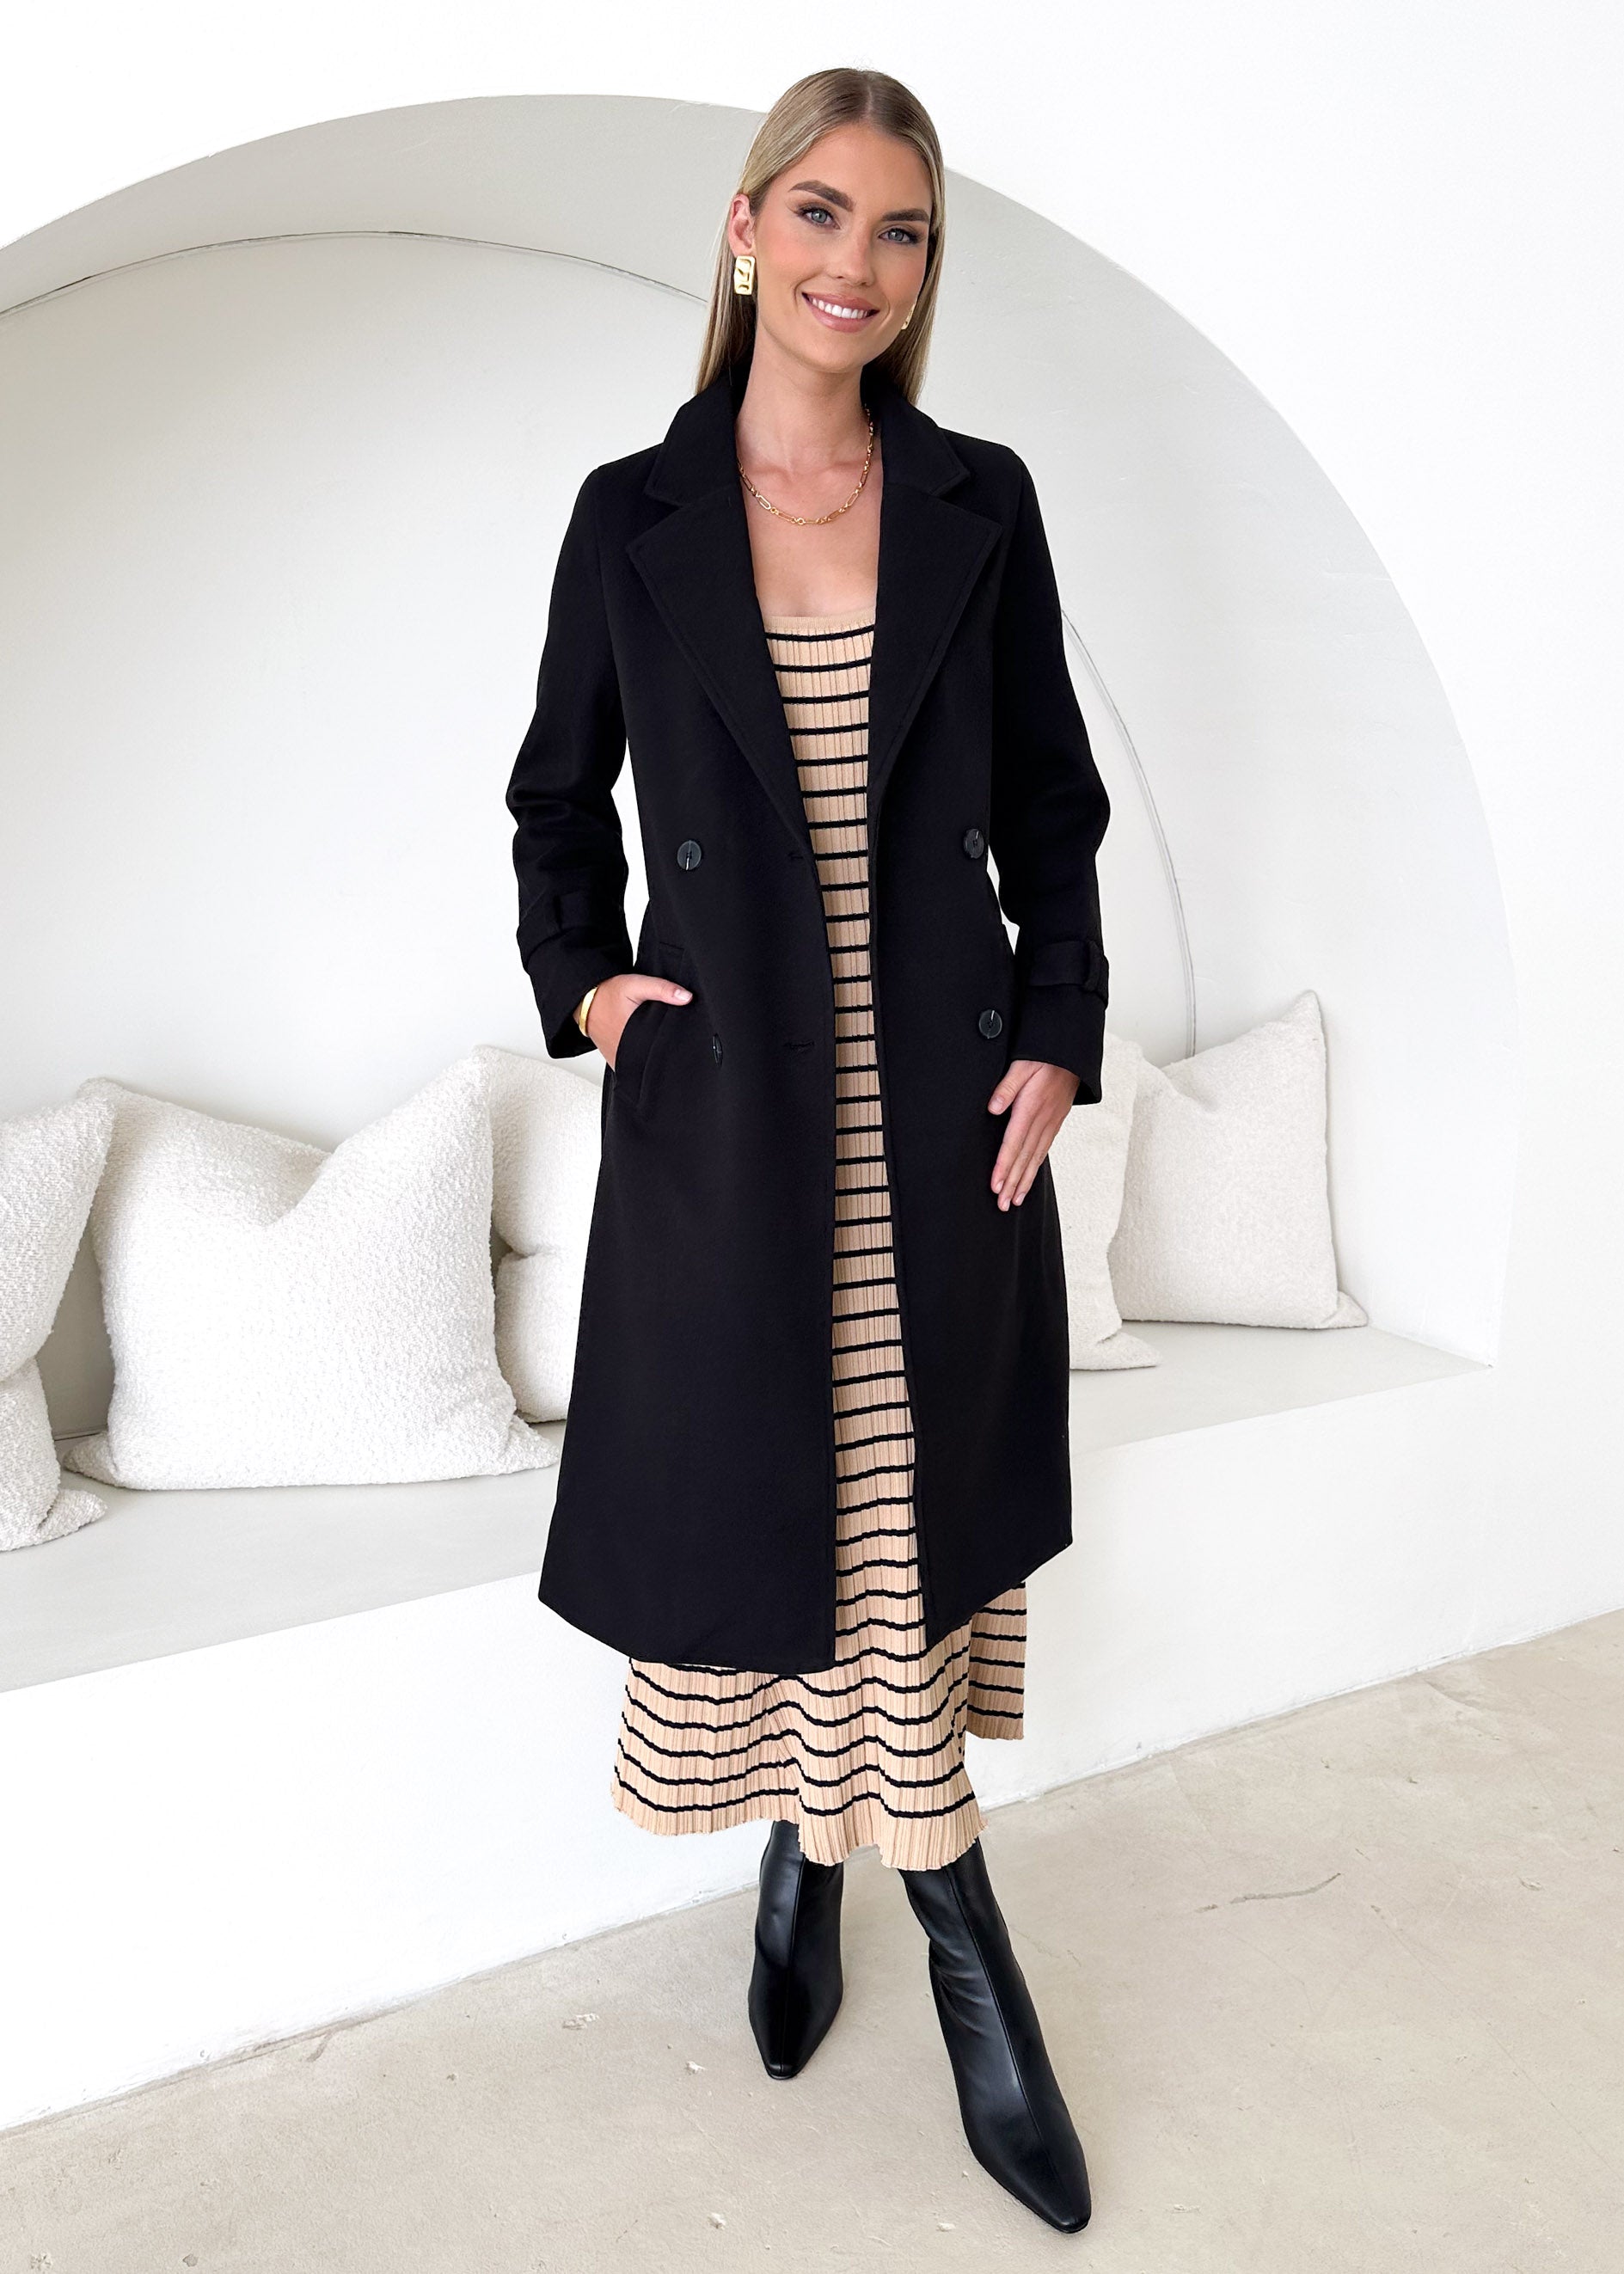 Doria Knit Maxi Dress - Beige Stripe